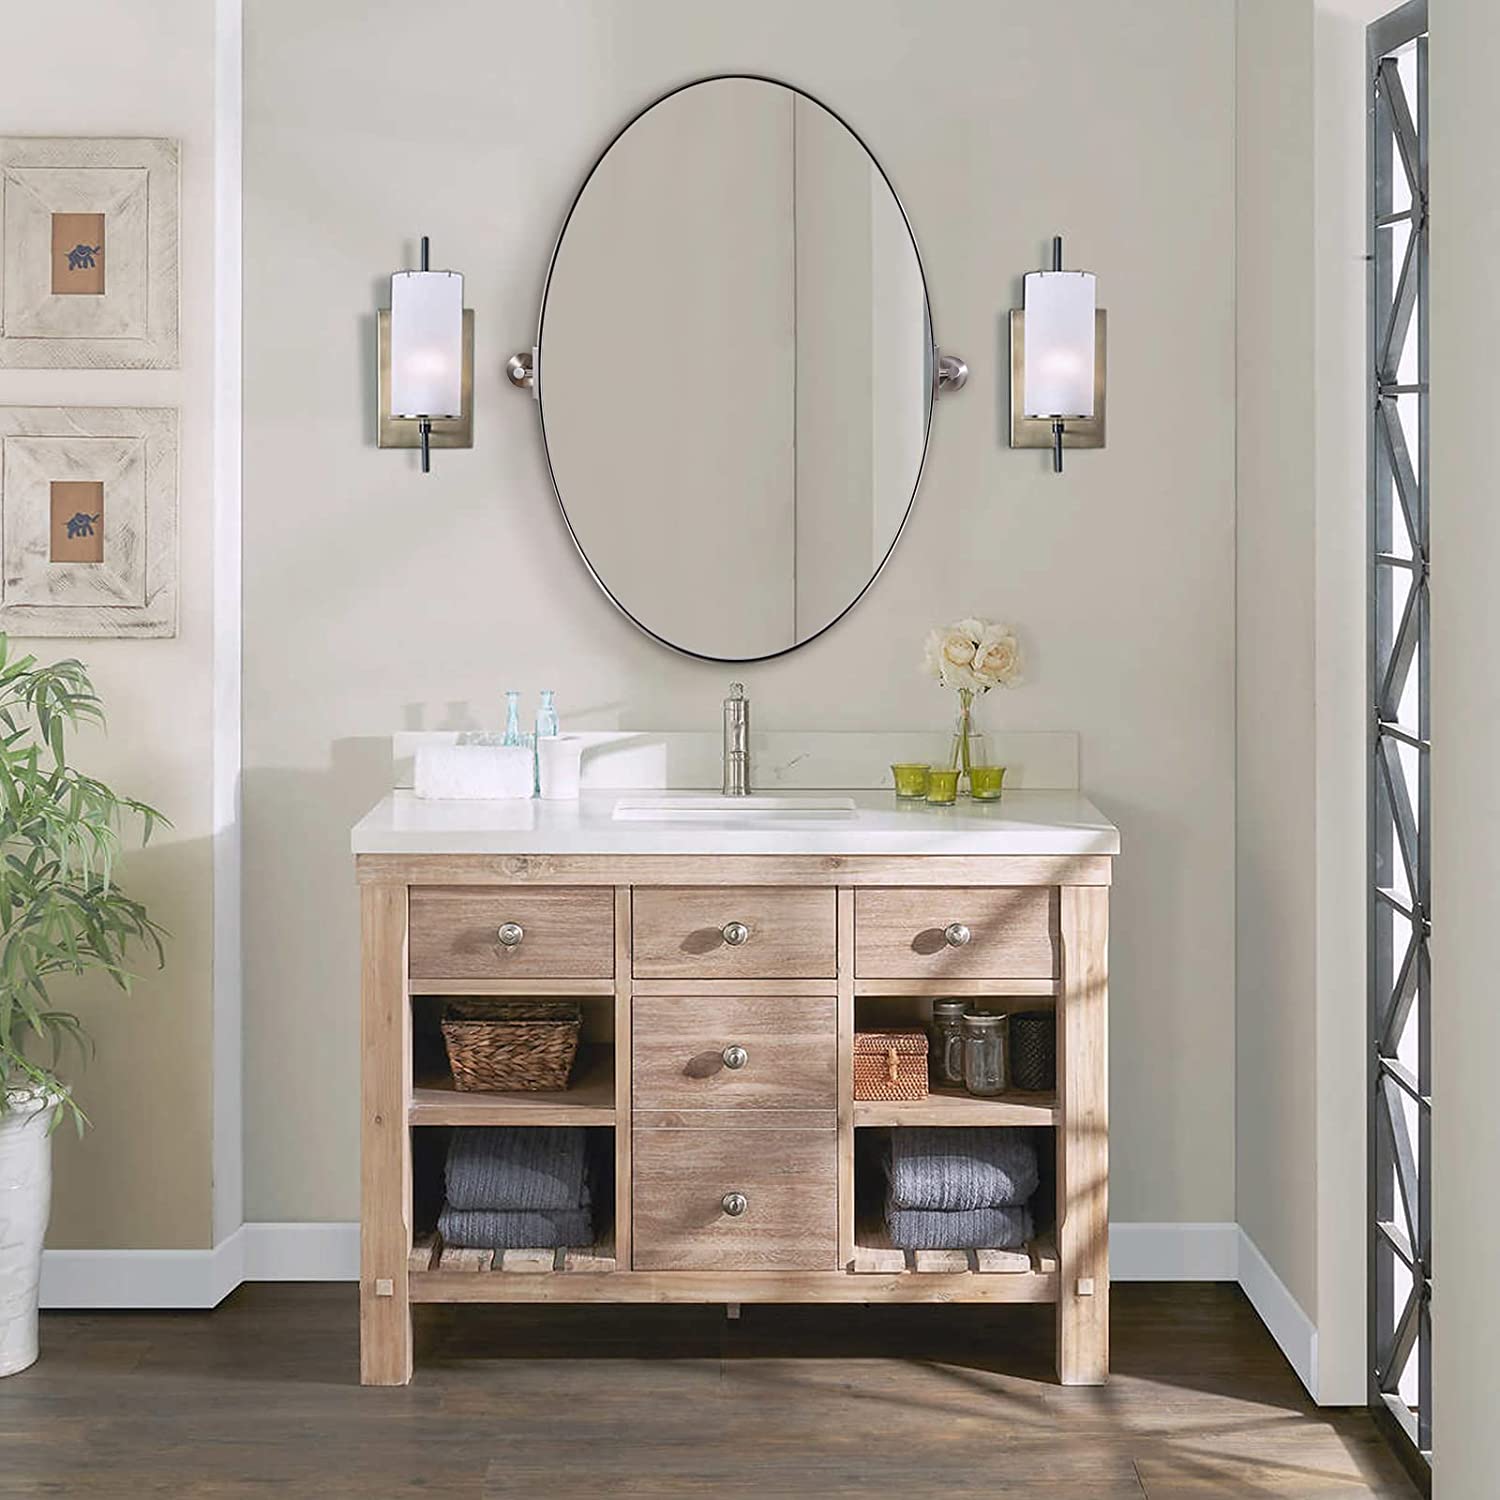 Open Box Like New : Modern Matte Black Oval Mirror Bathroom Vanity Pivot Tilt Mirror Floating Adjustable Swivel Oblong Mirror Wall Mounted Vertical